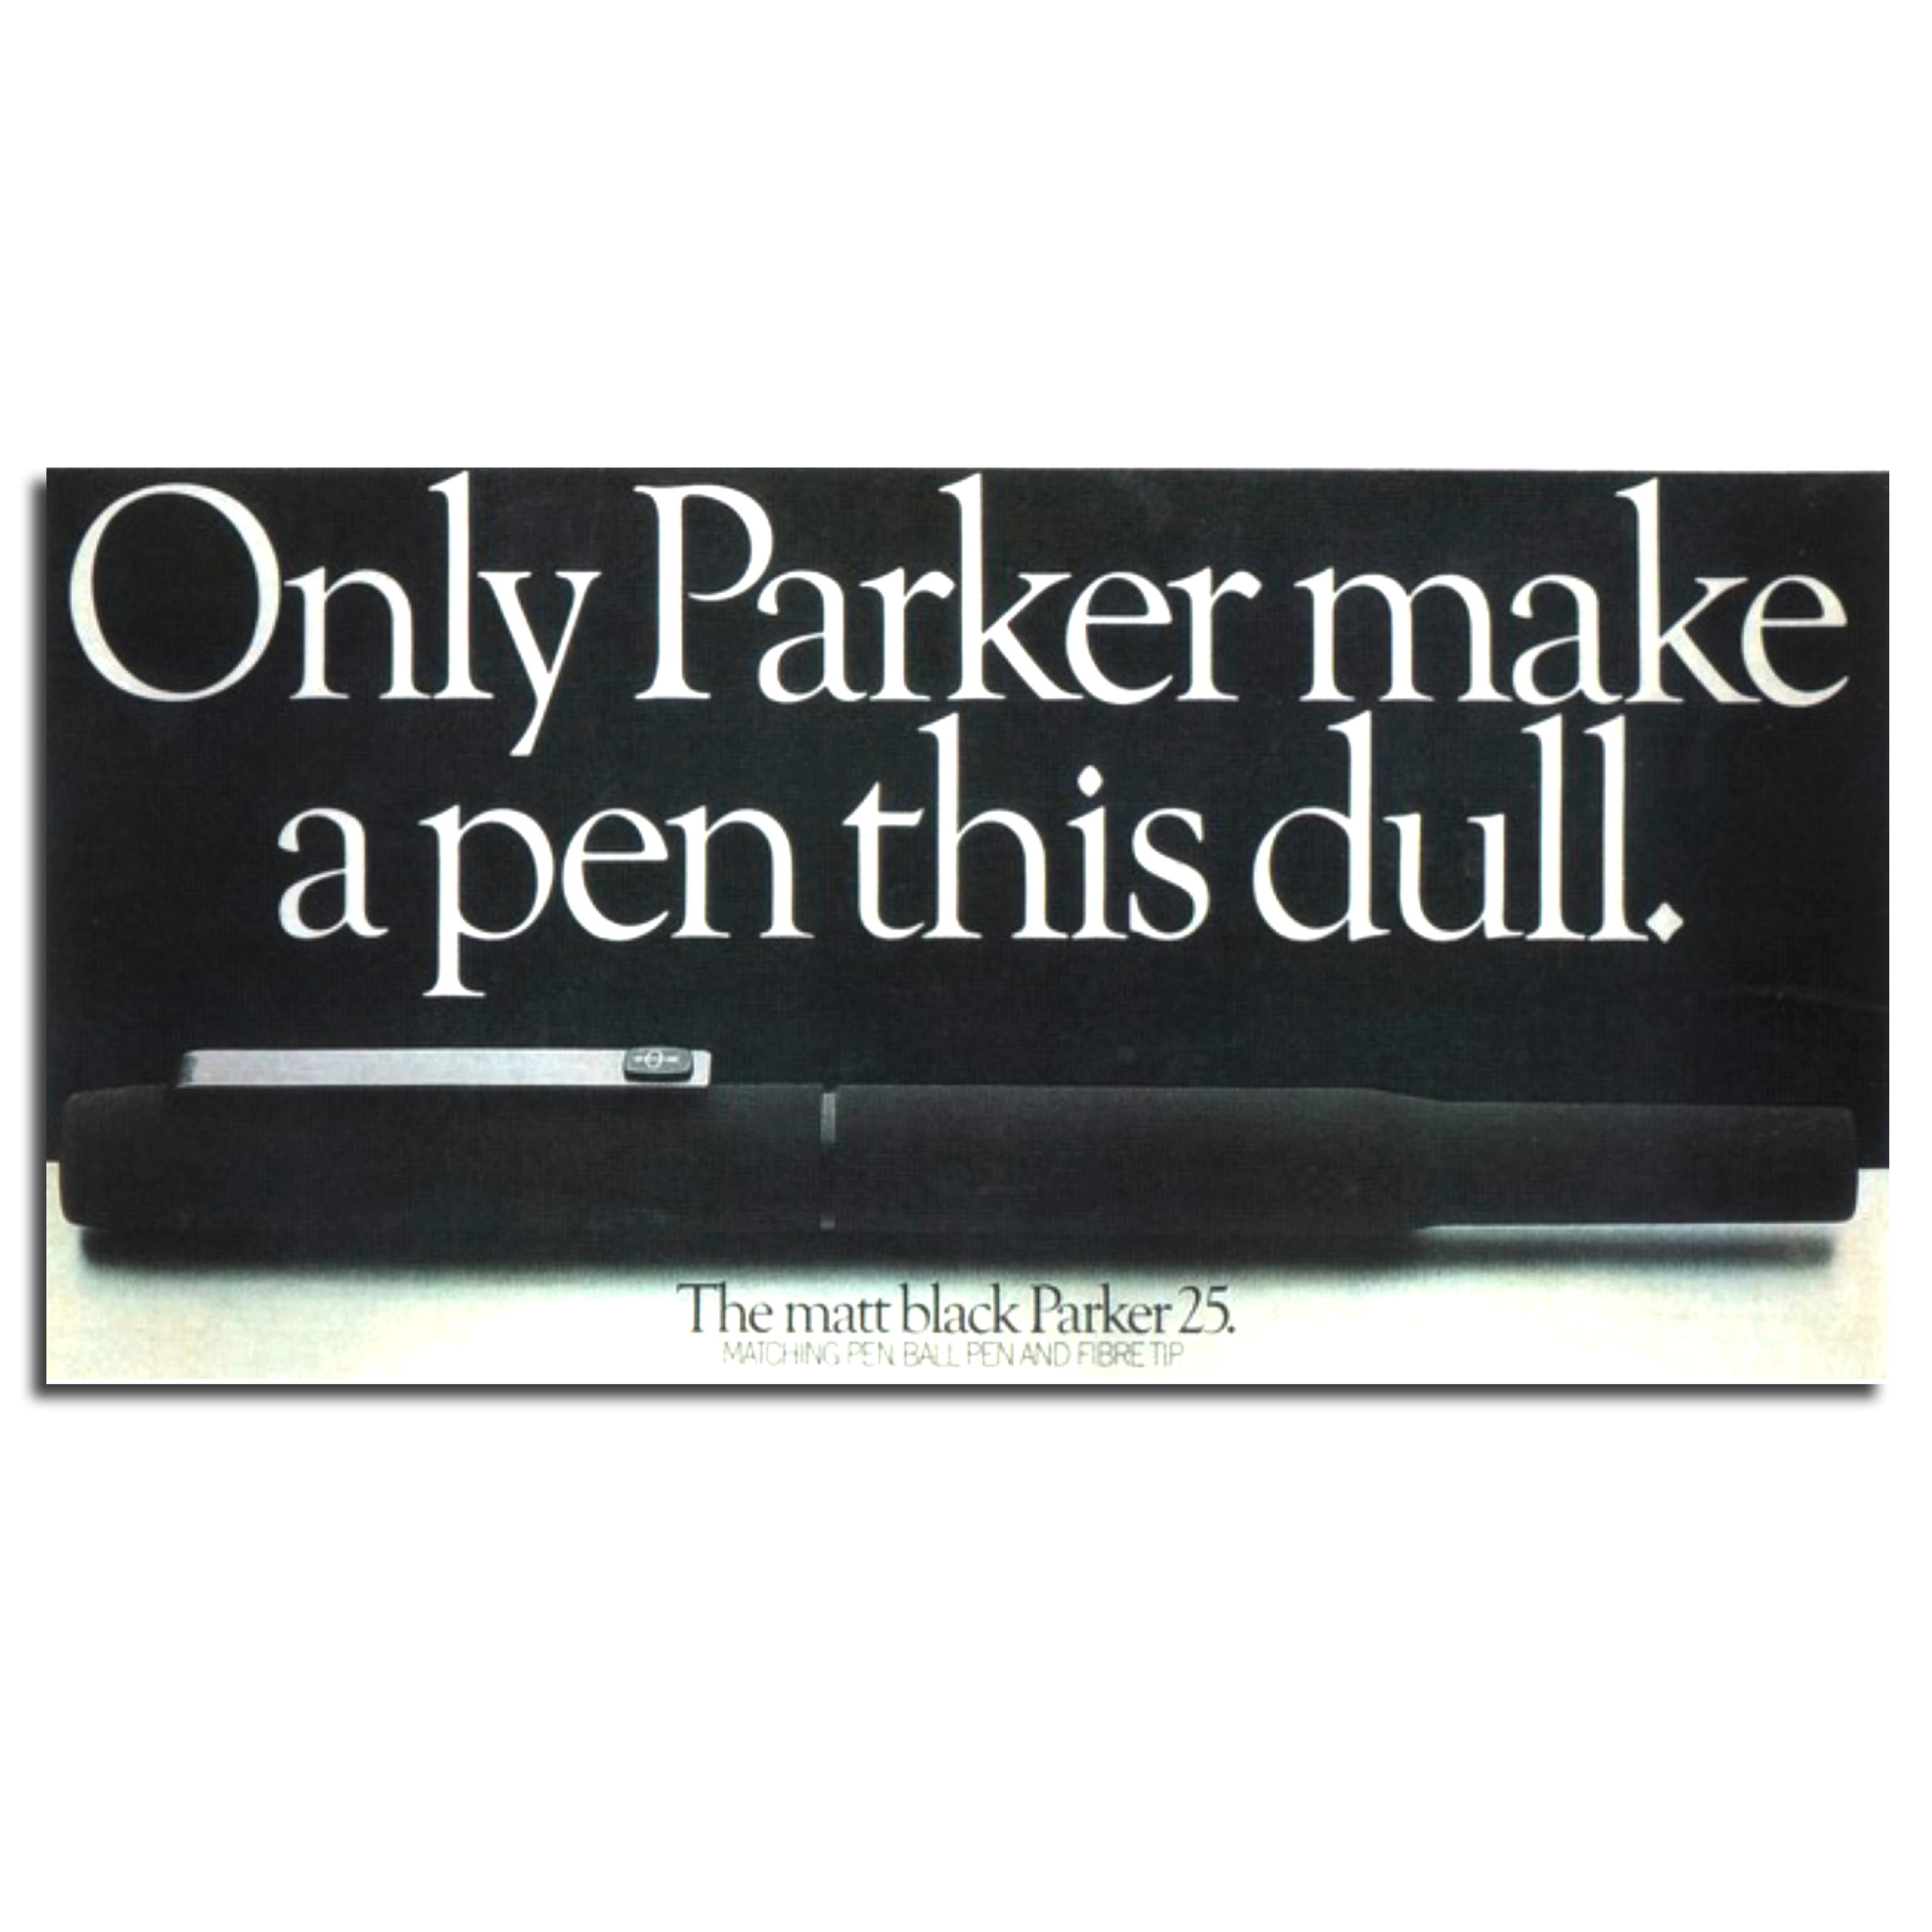 Matt black Parker Pen on a black background. Award-winning poster.